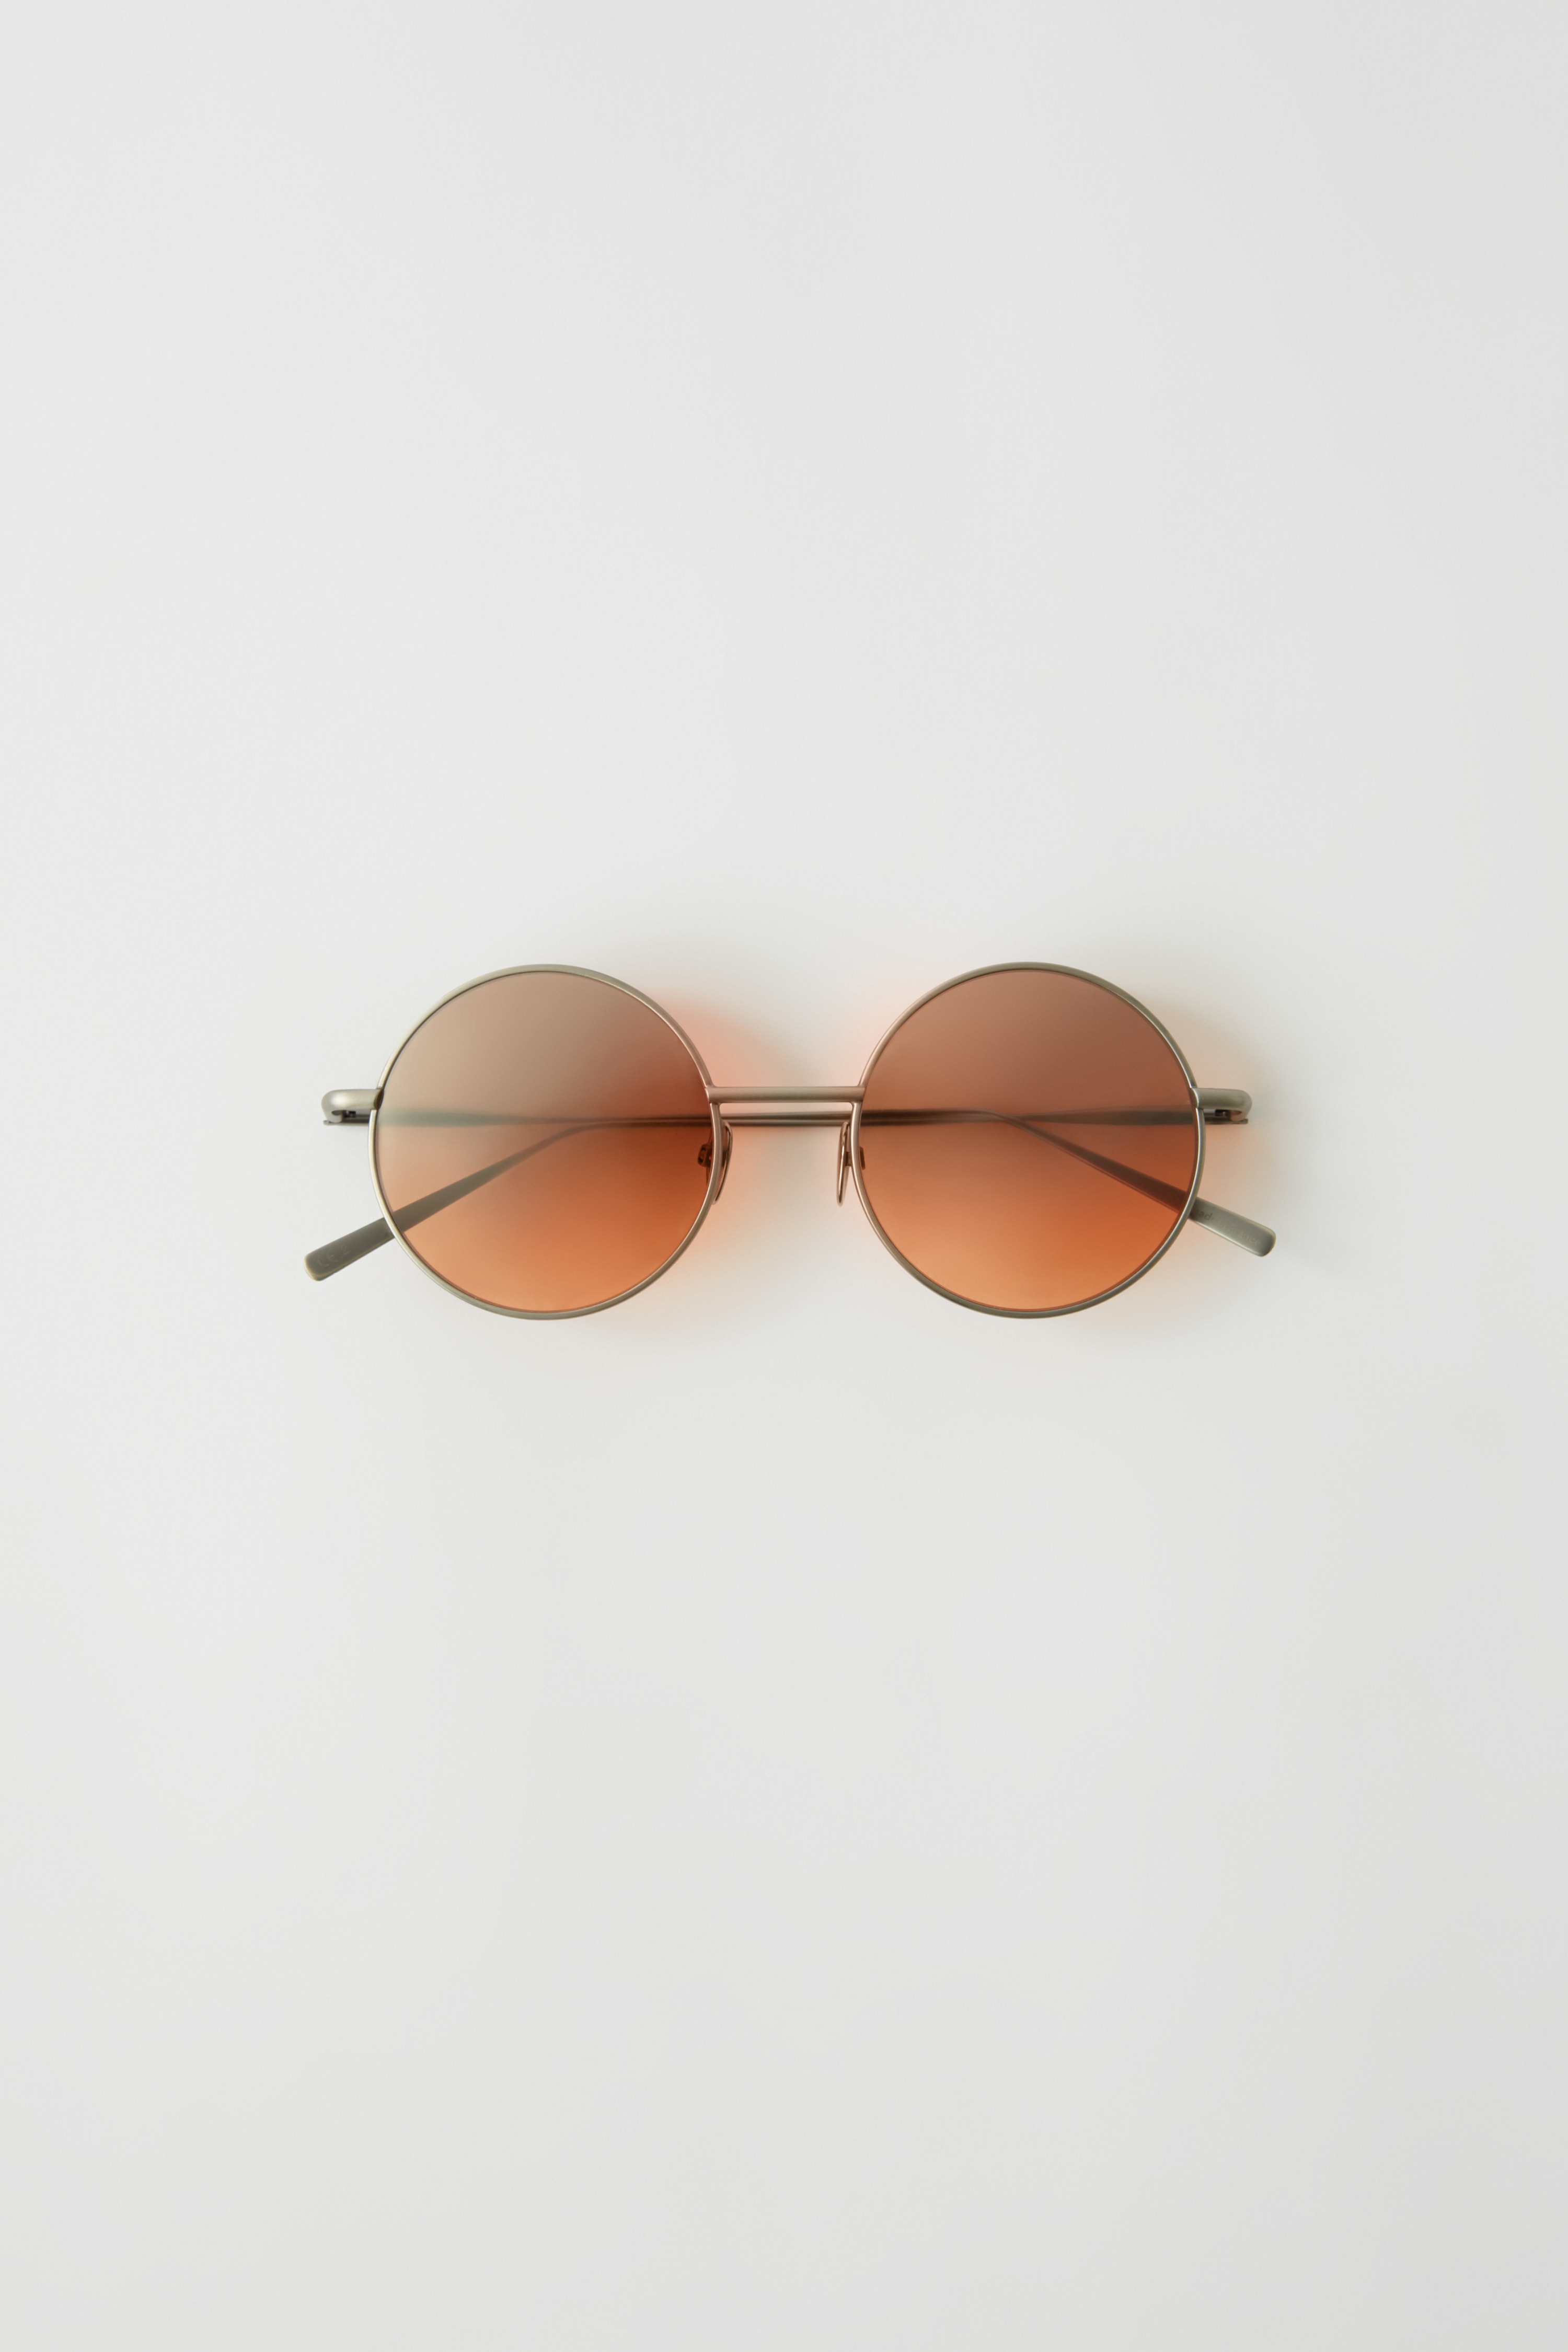 Acne Studios Spring/Summer 2019 Sunglasses Range Shades Eyewear Accessories 